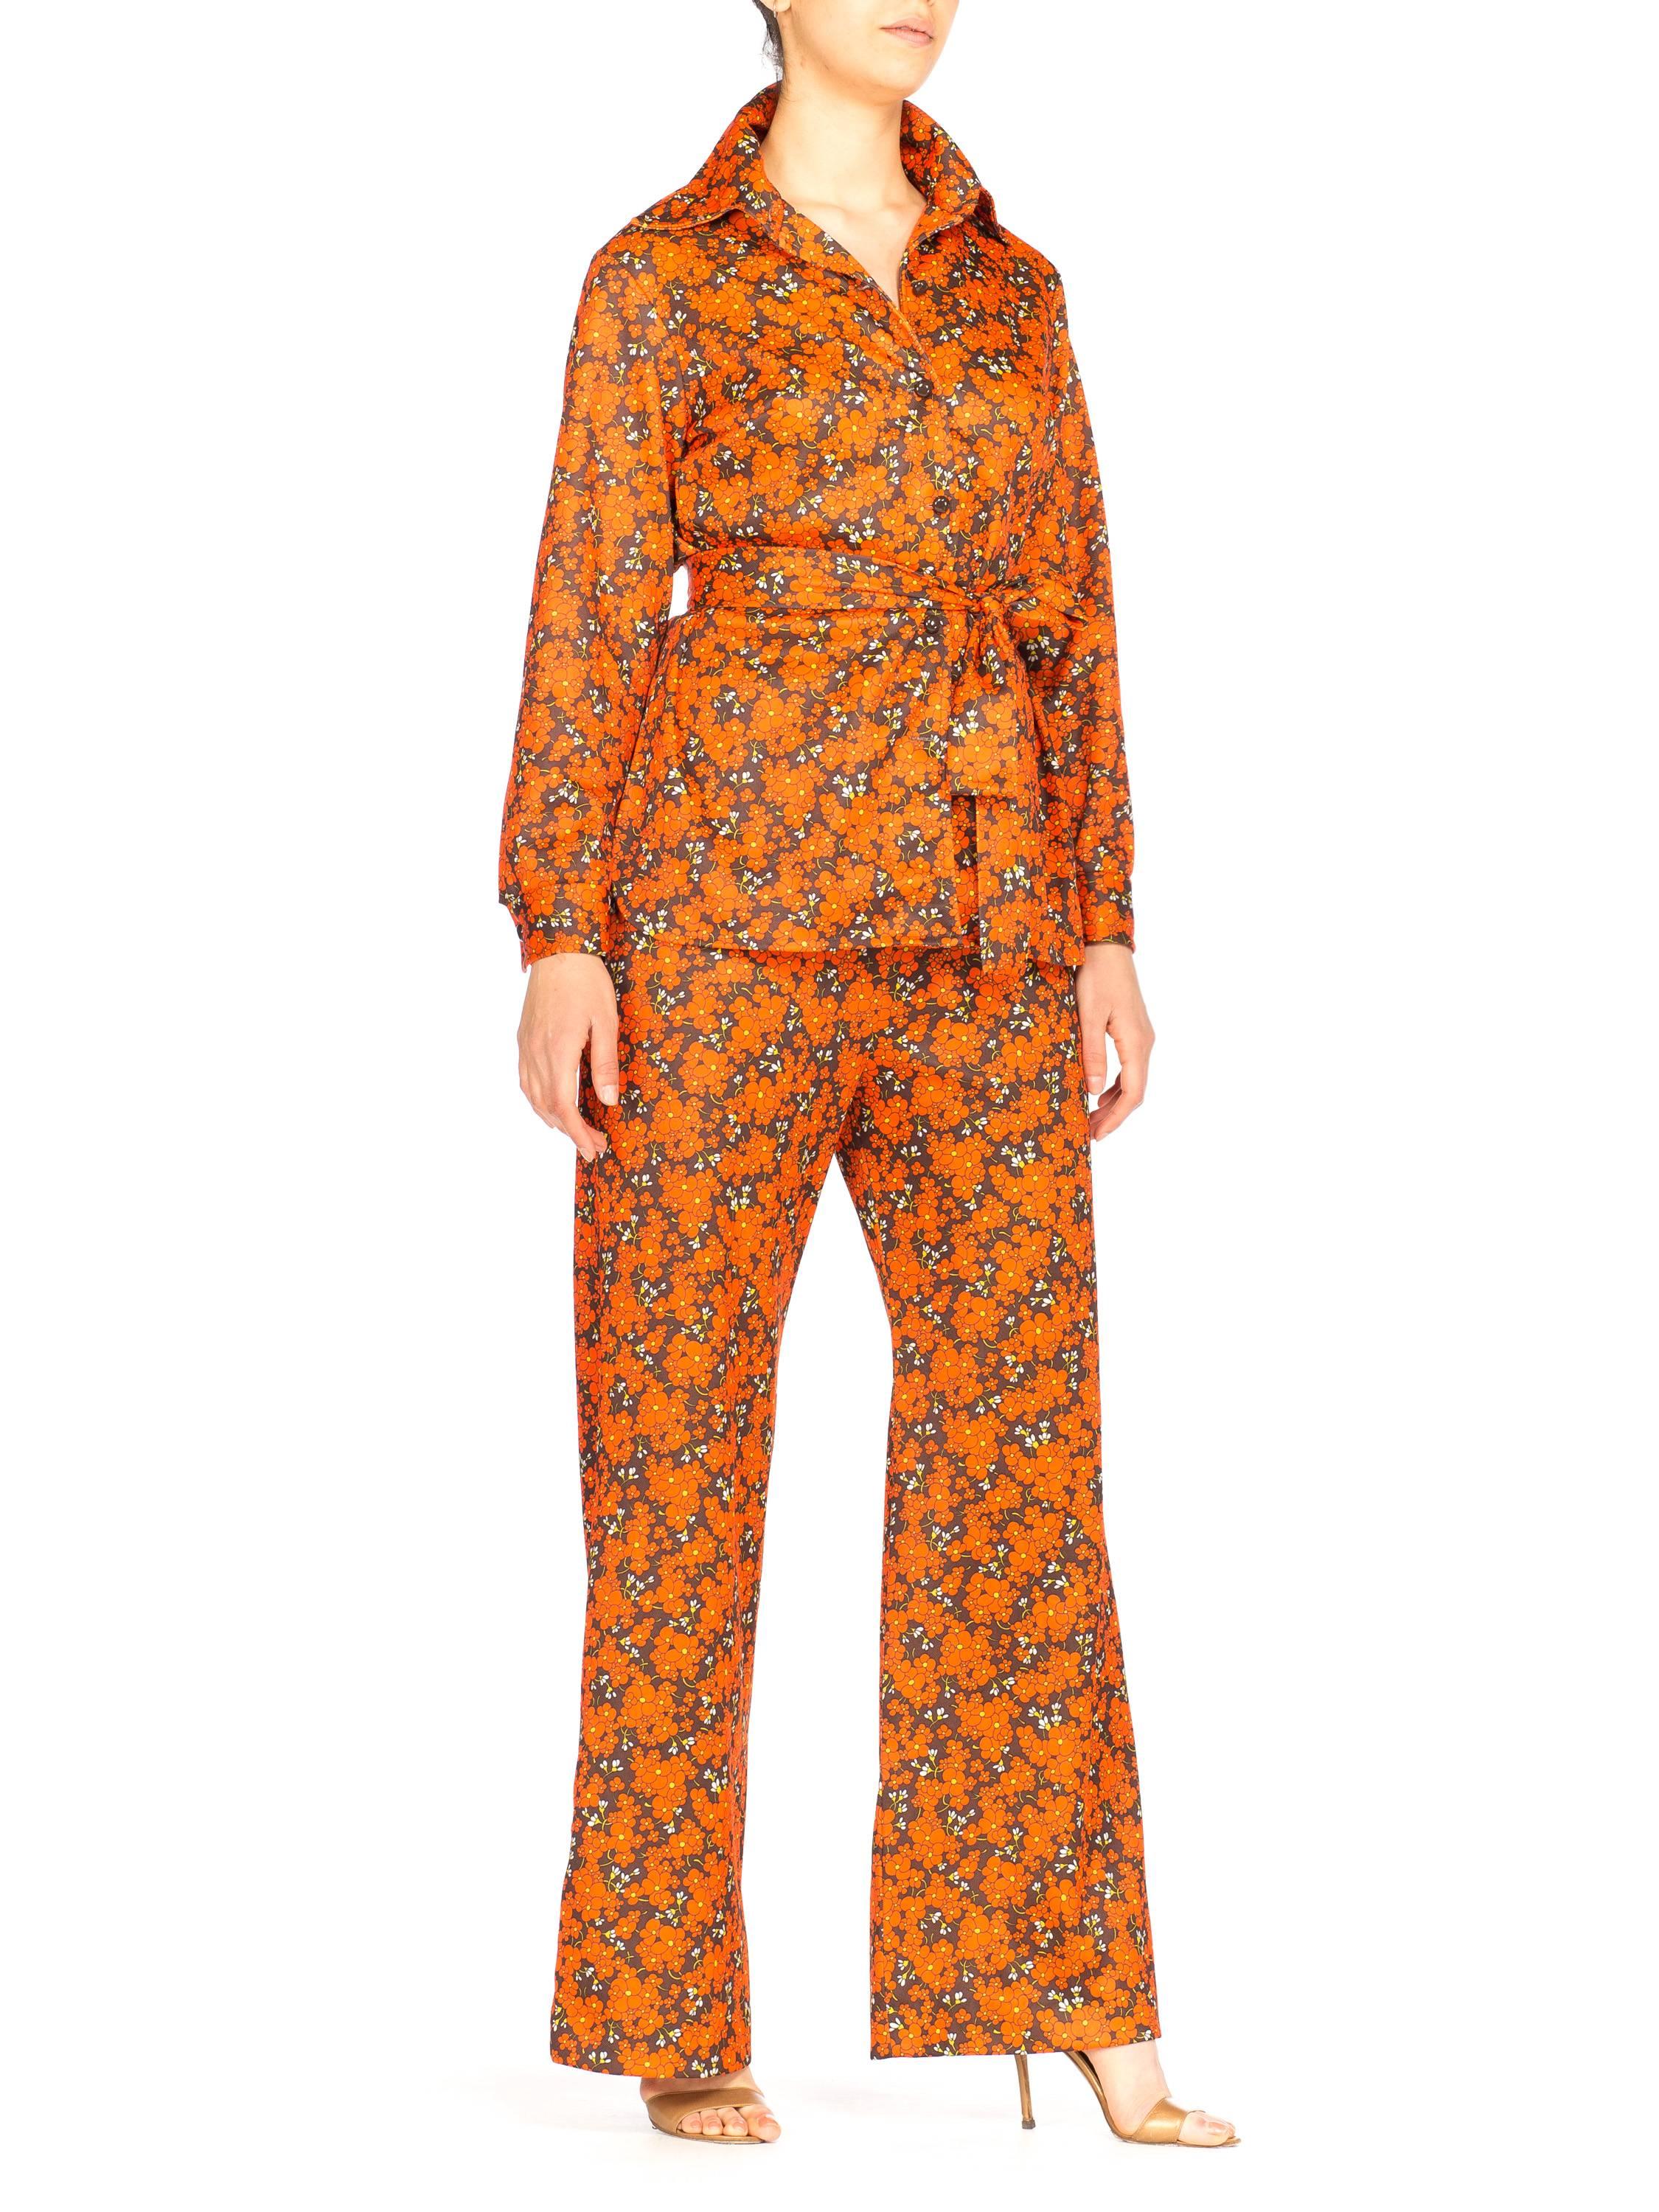 Orange and Brown Floral Mod Disco Pantsuit Set, 1970s 4